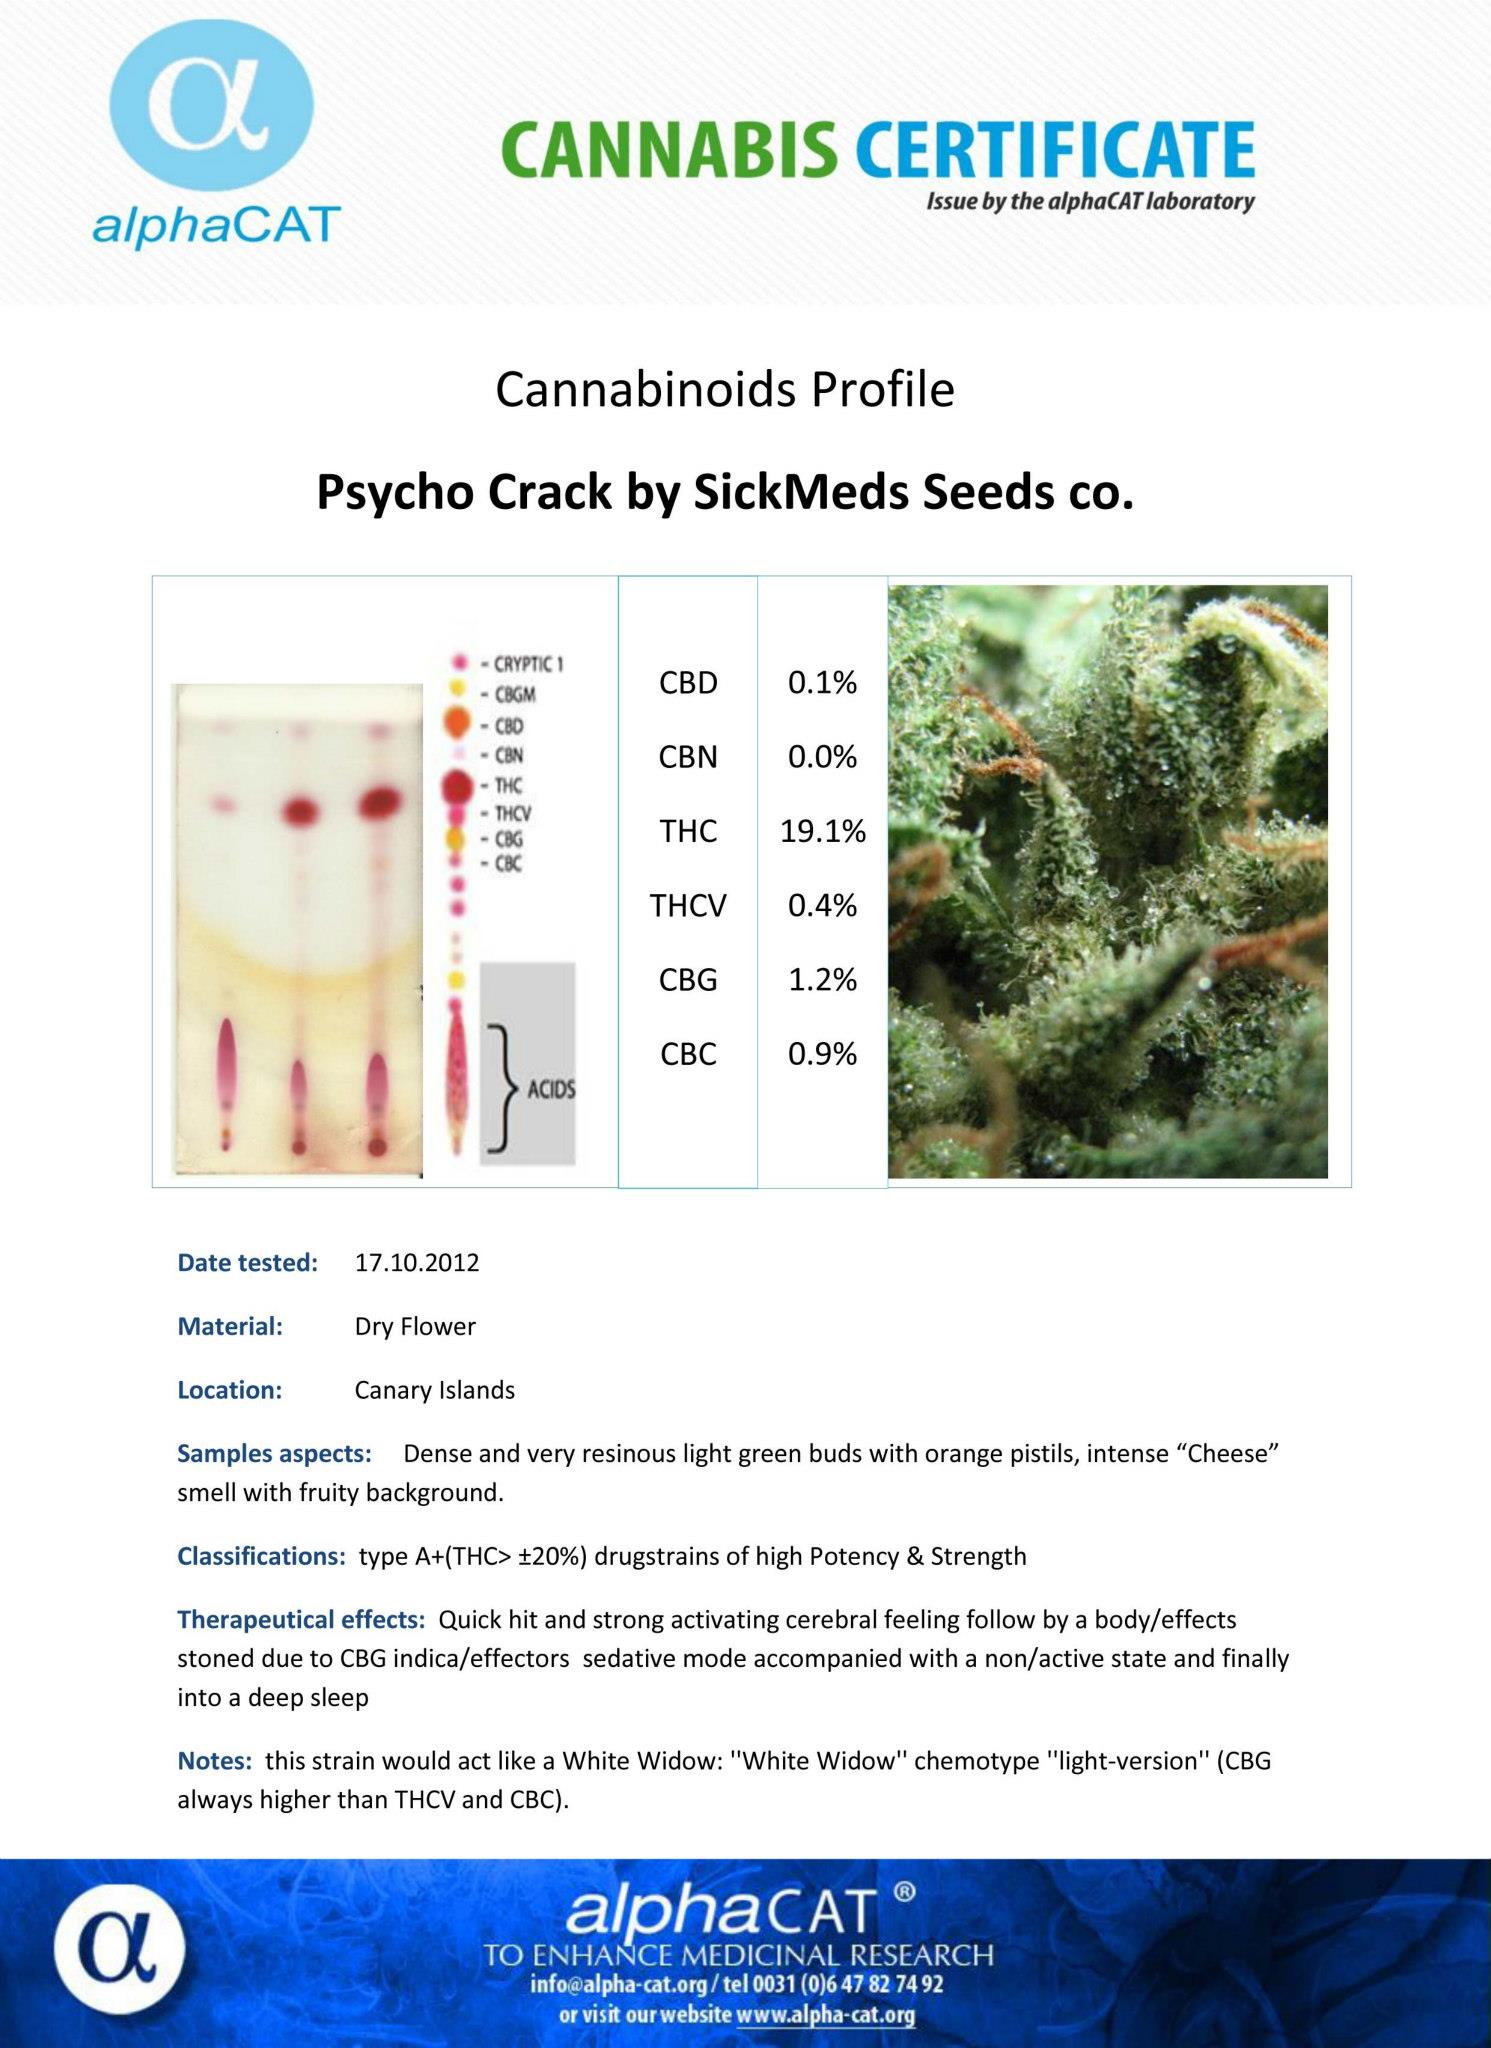 Psycho Crack Feminized Marijuana Seeds